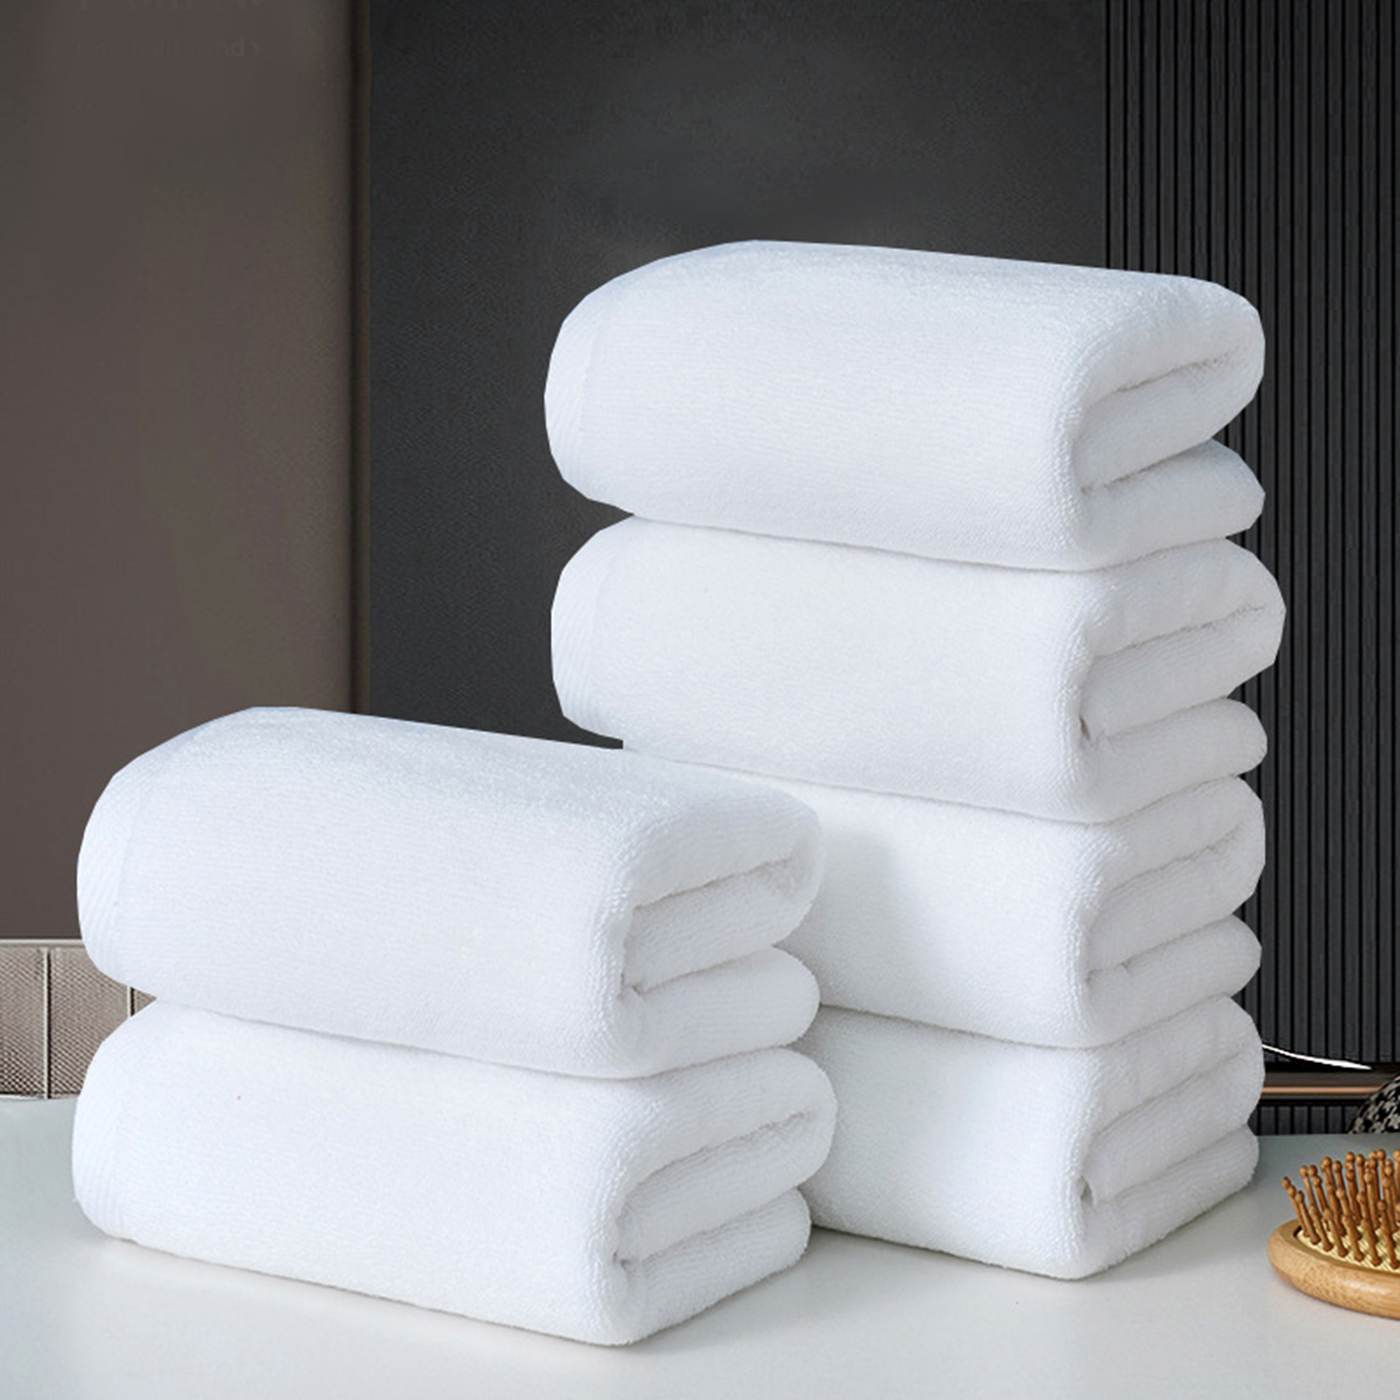 Customized Bath Towel4